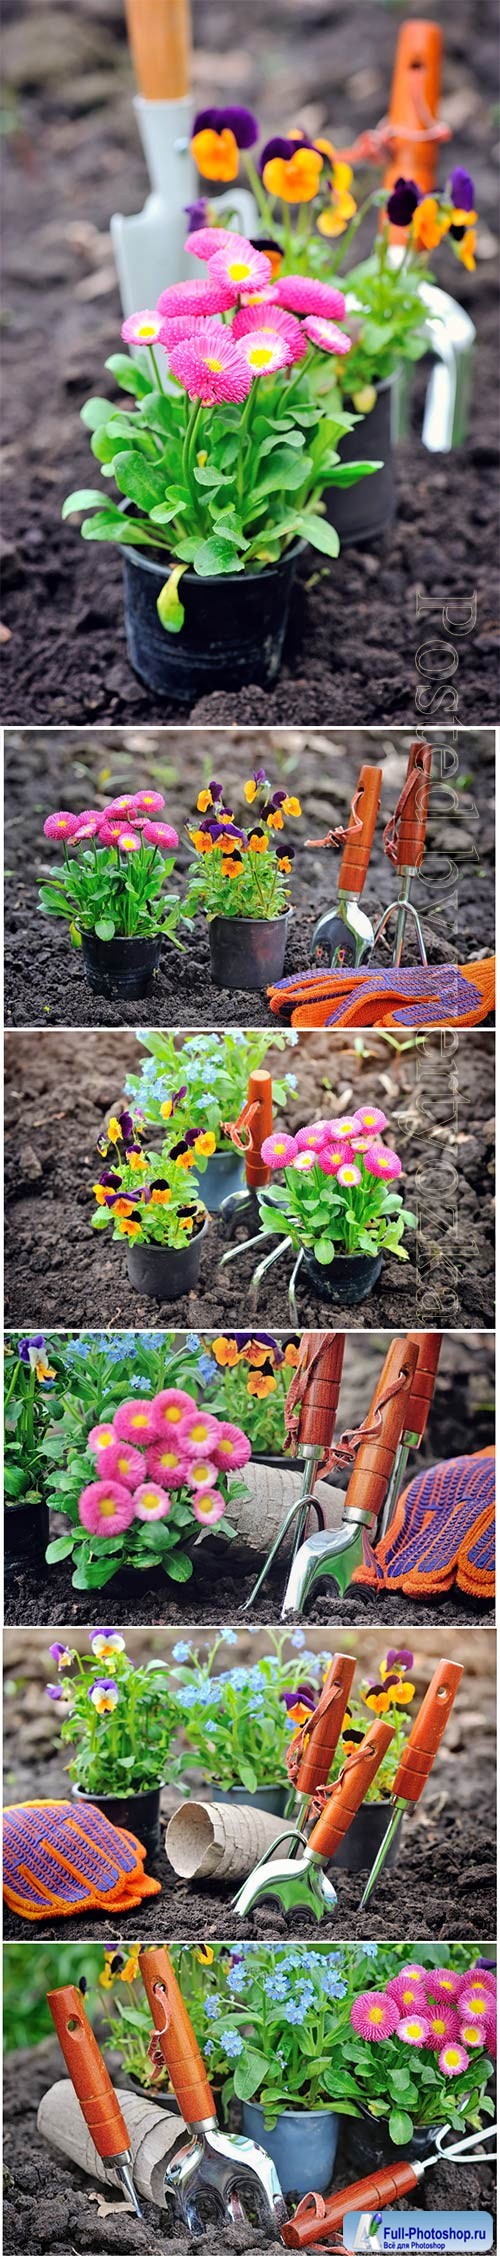 Gardening, flower planting beautiful stock photo